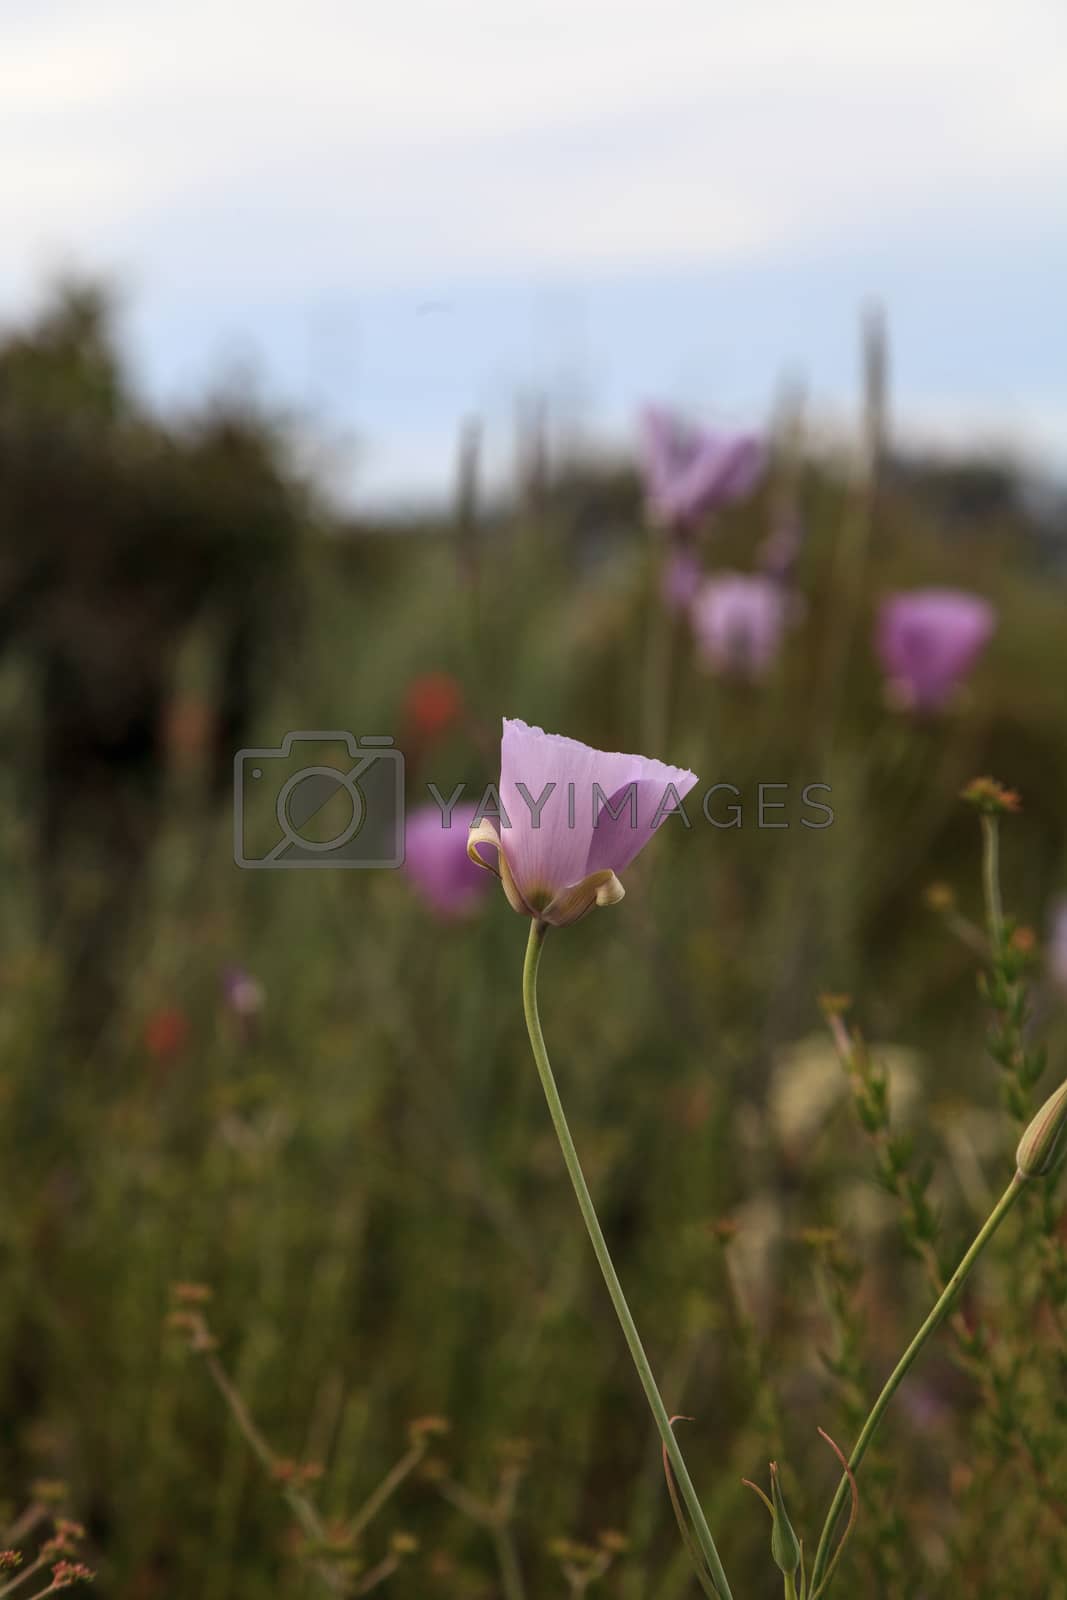 Royalty free image of Purple gleam California poppy flower by steffstarr